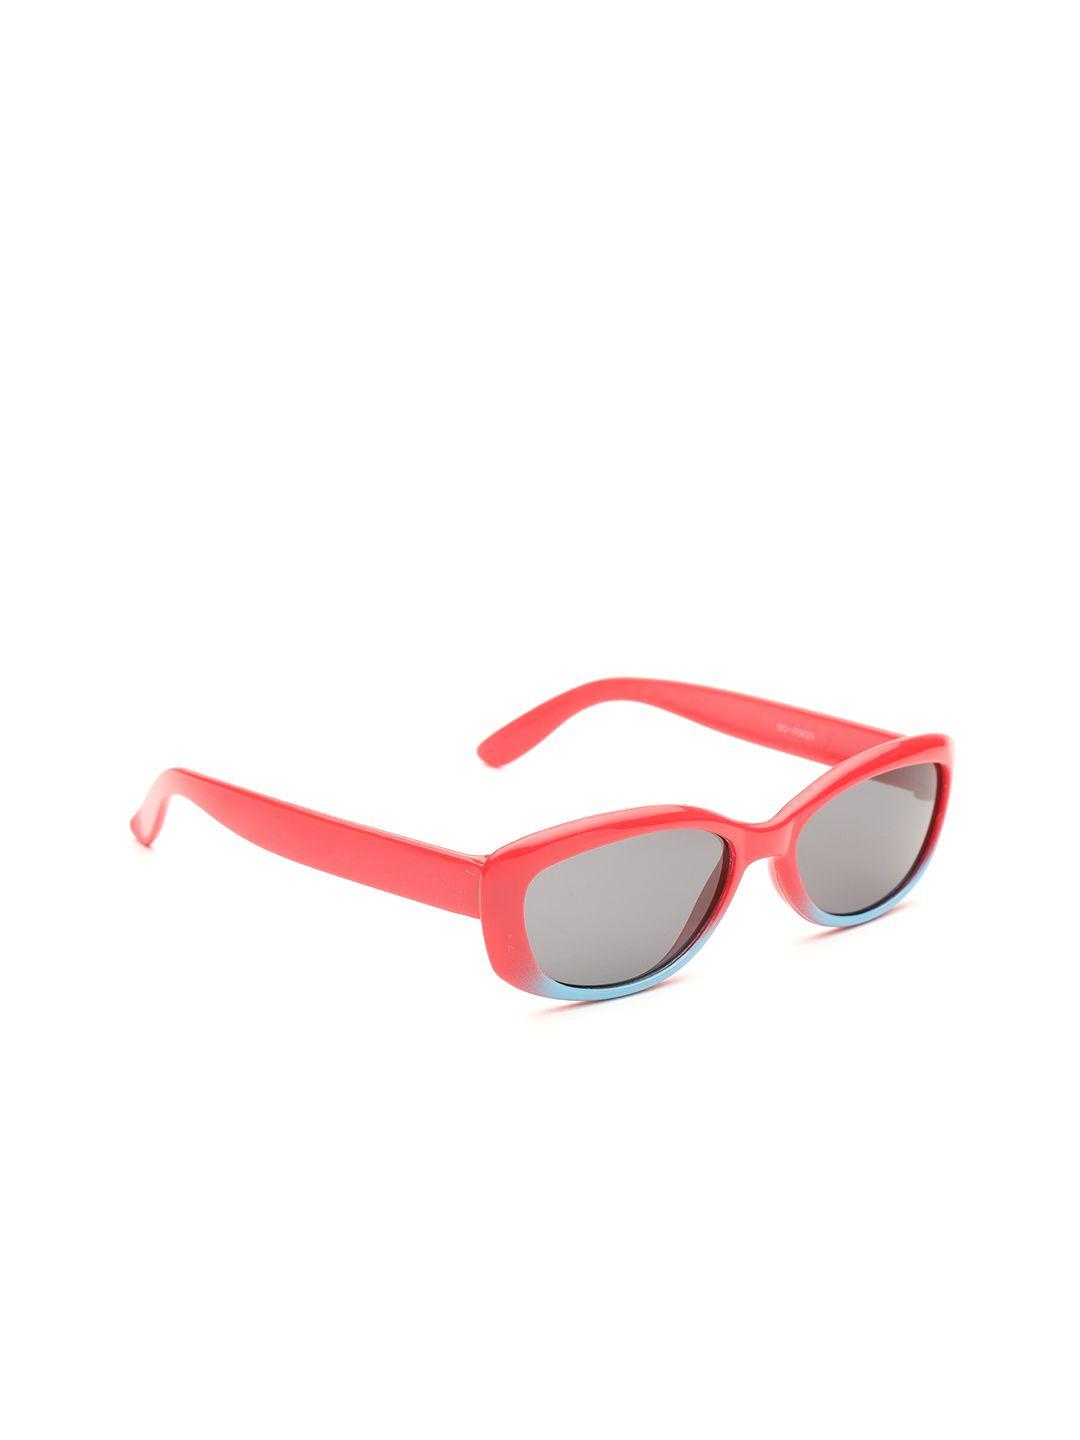 carlton london boys uv protected lens oval sunglasses